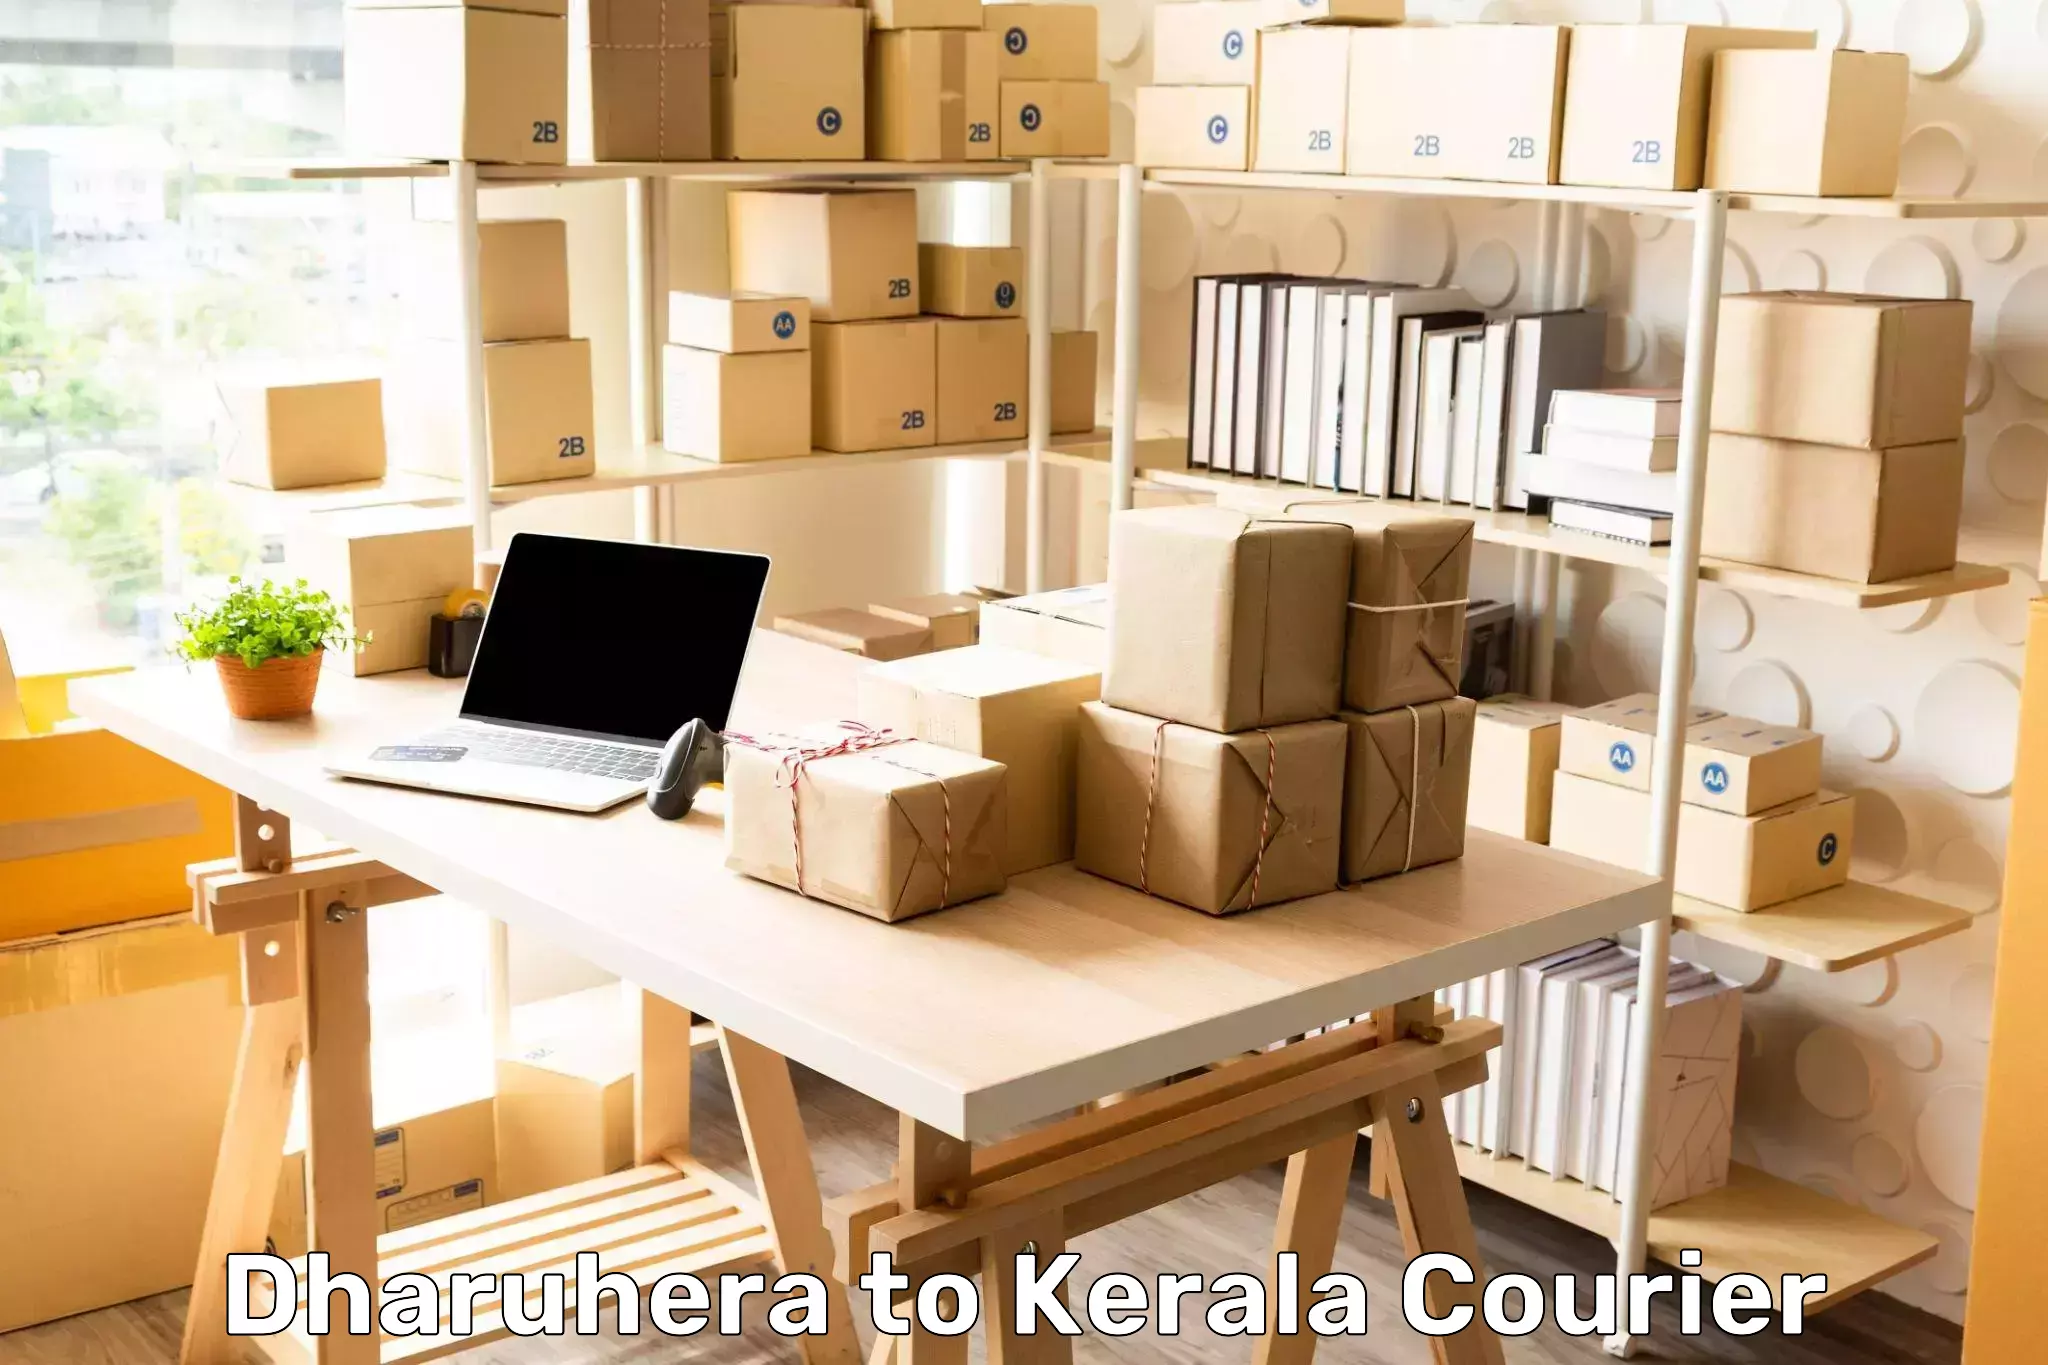 User-friendly courier app Dharuhera to Kerala